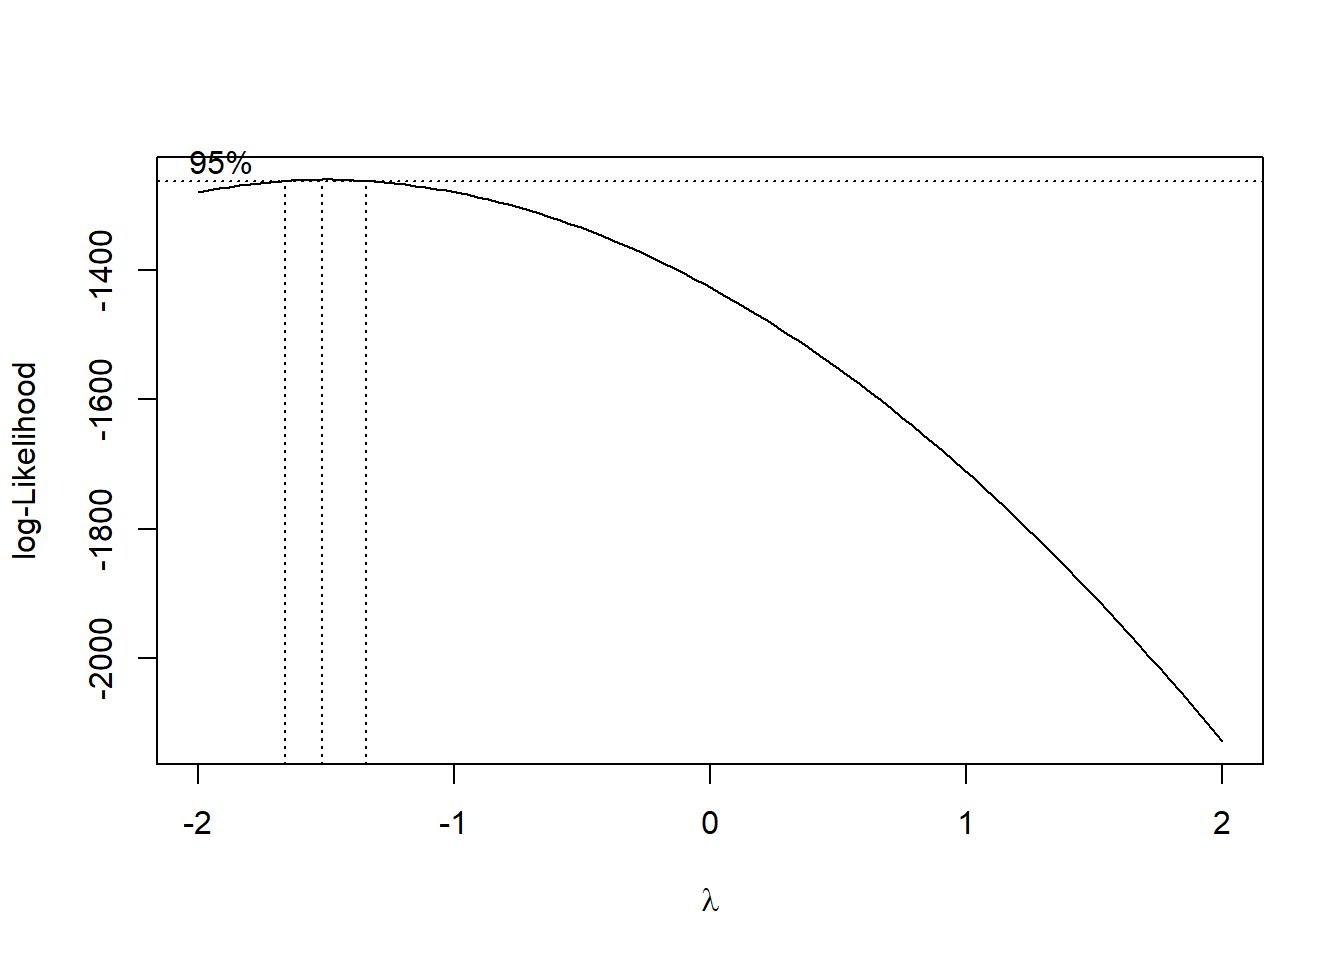 Box-Cox transformation: log-likelihood vs. lambda plot